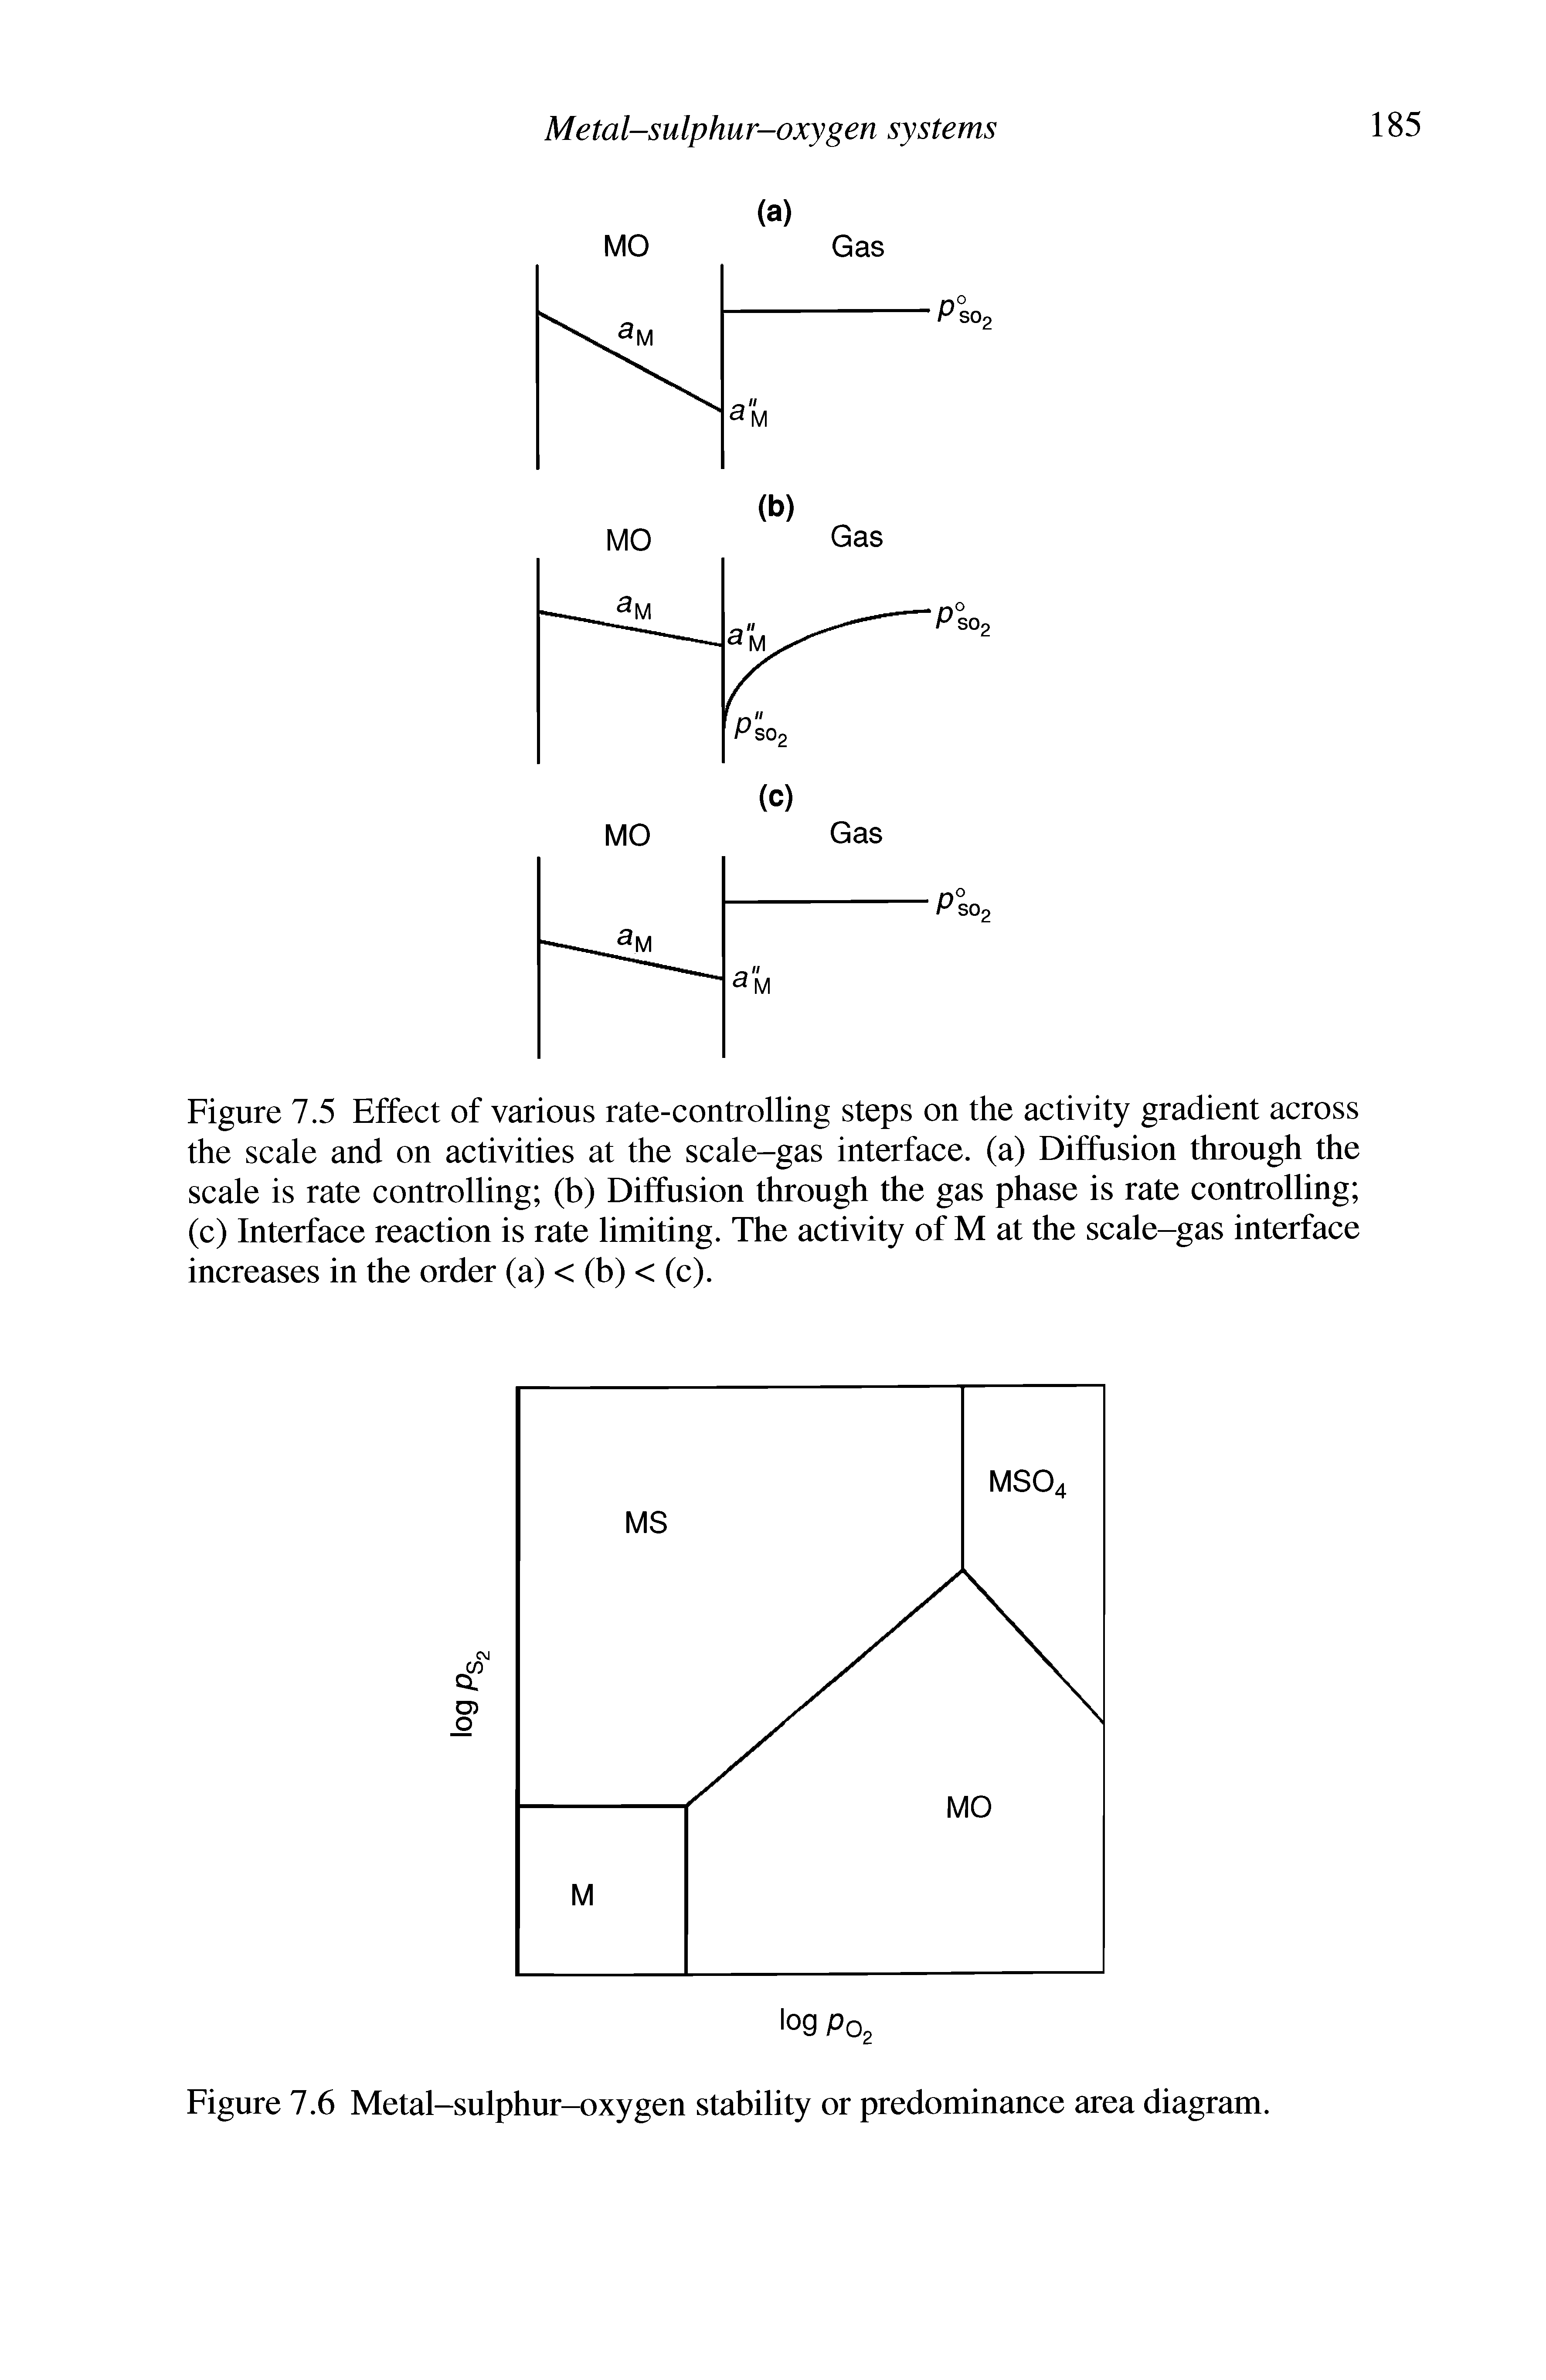 Figure 7.6 Metal-sulphur-oxygen stability or predominance area diagram.